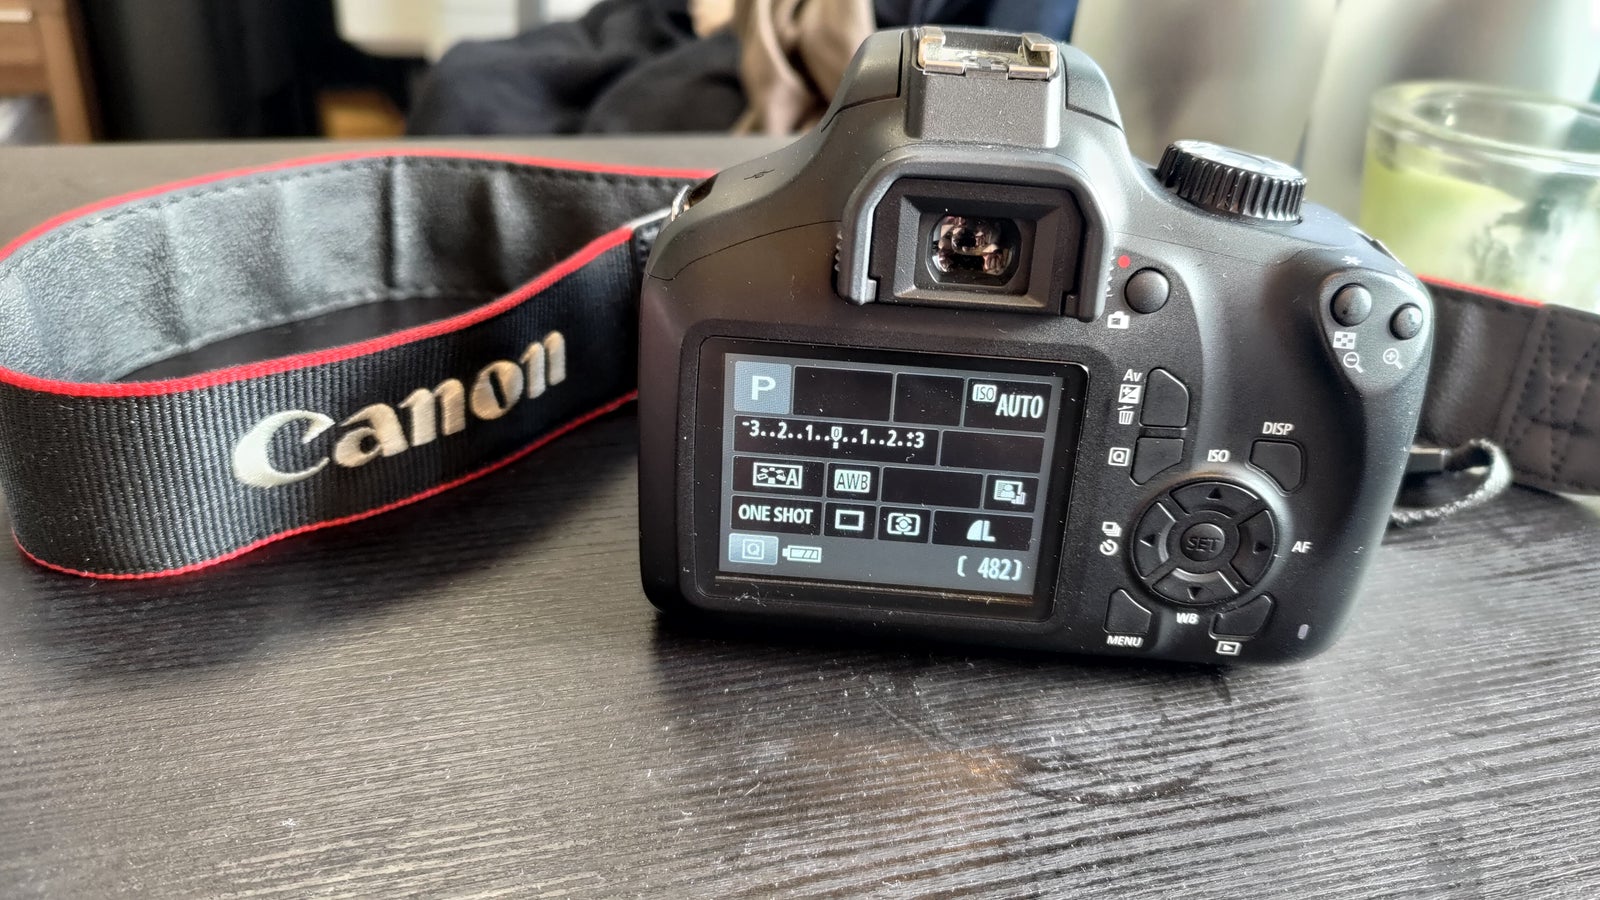 Canon, Canon EOS 4000 D, Perfekt